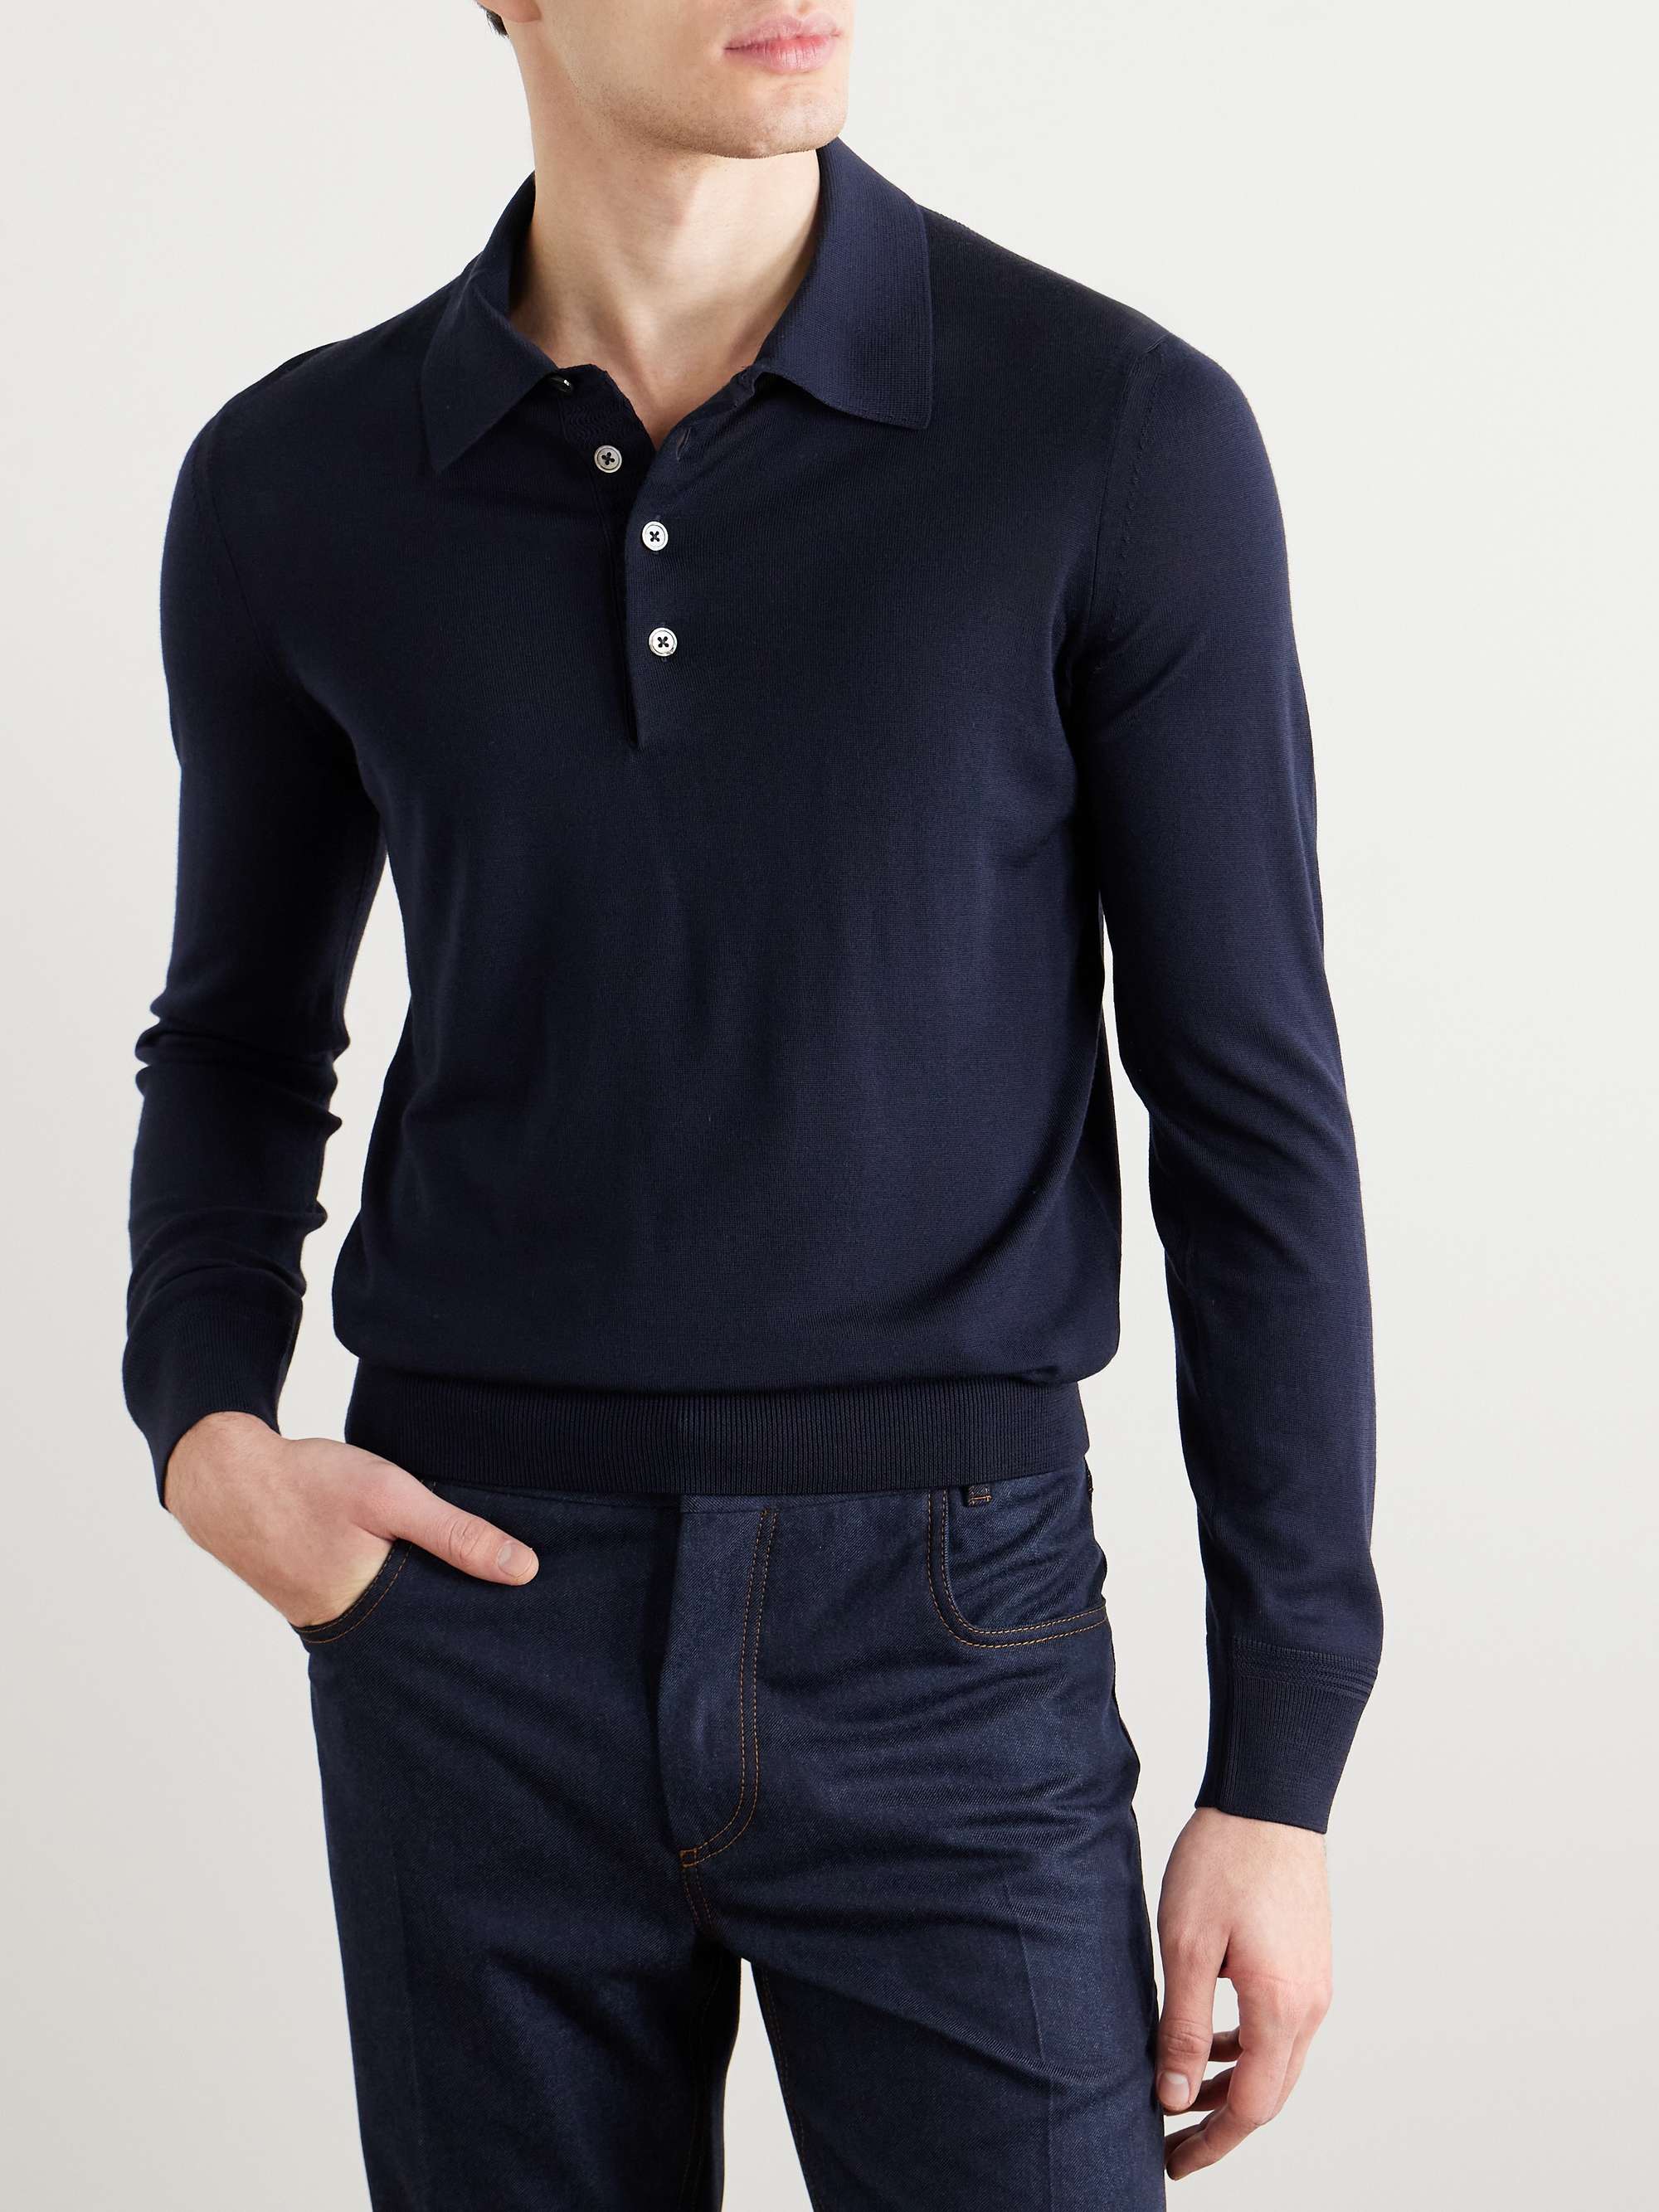 TOM FORD Slim-Fit Wool Polo Shirt for Men | MR PORTER